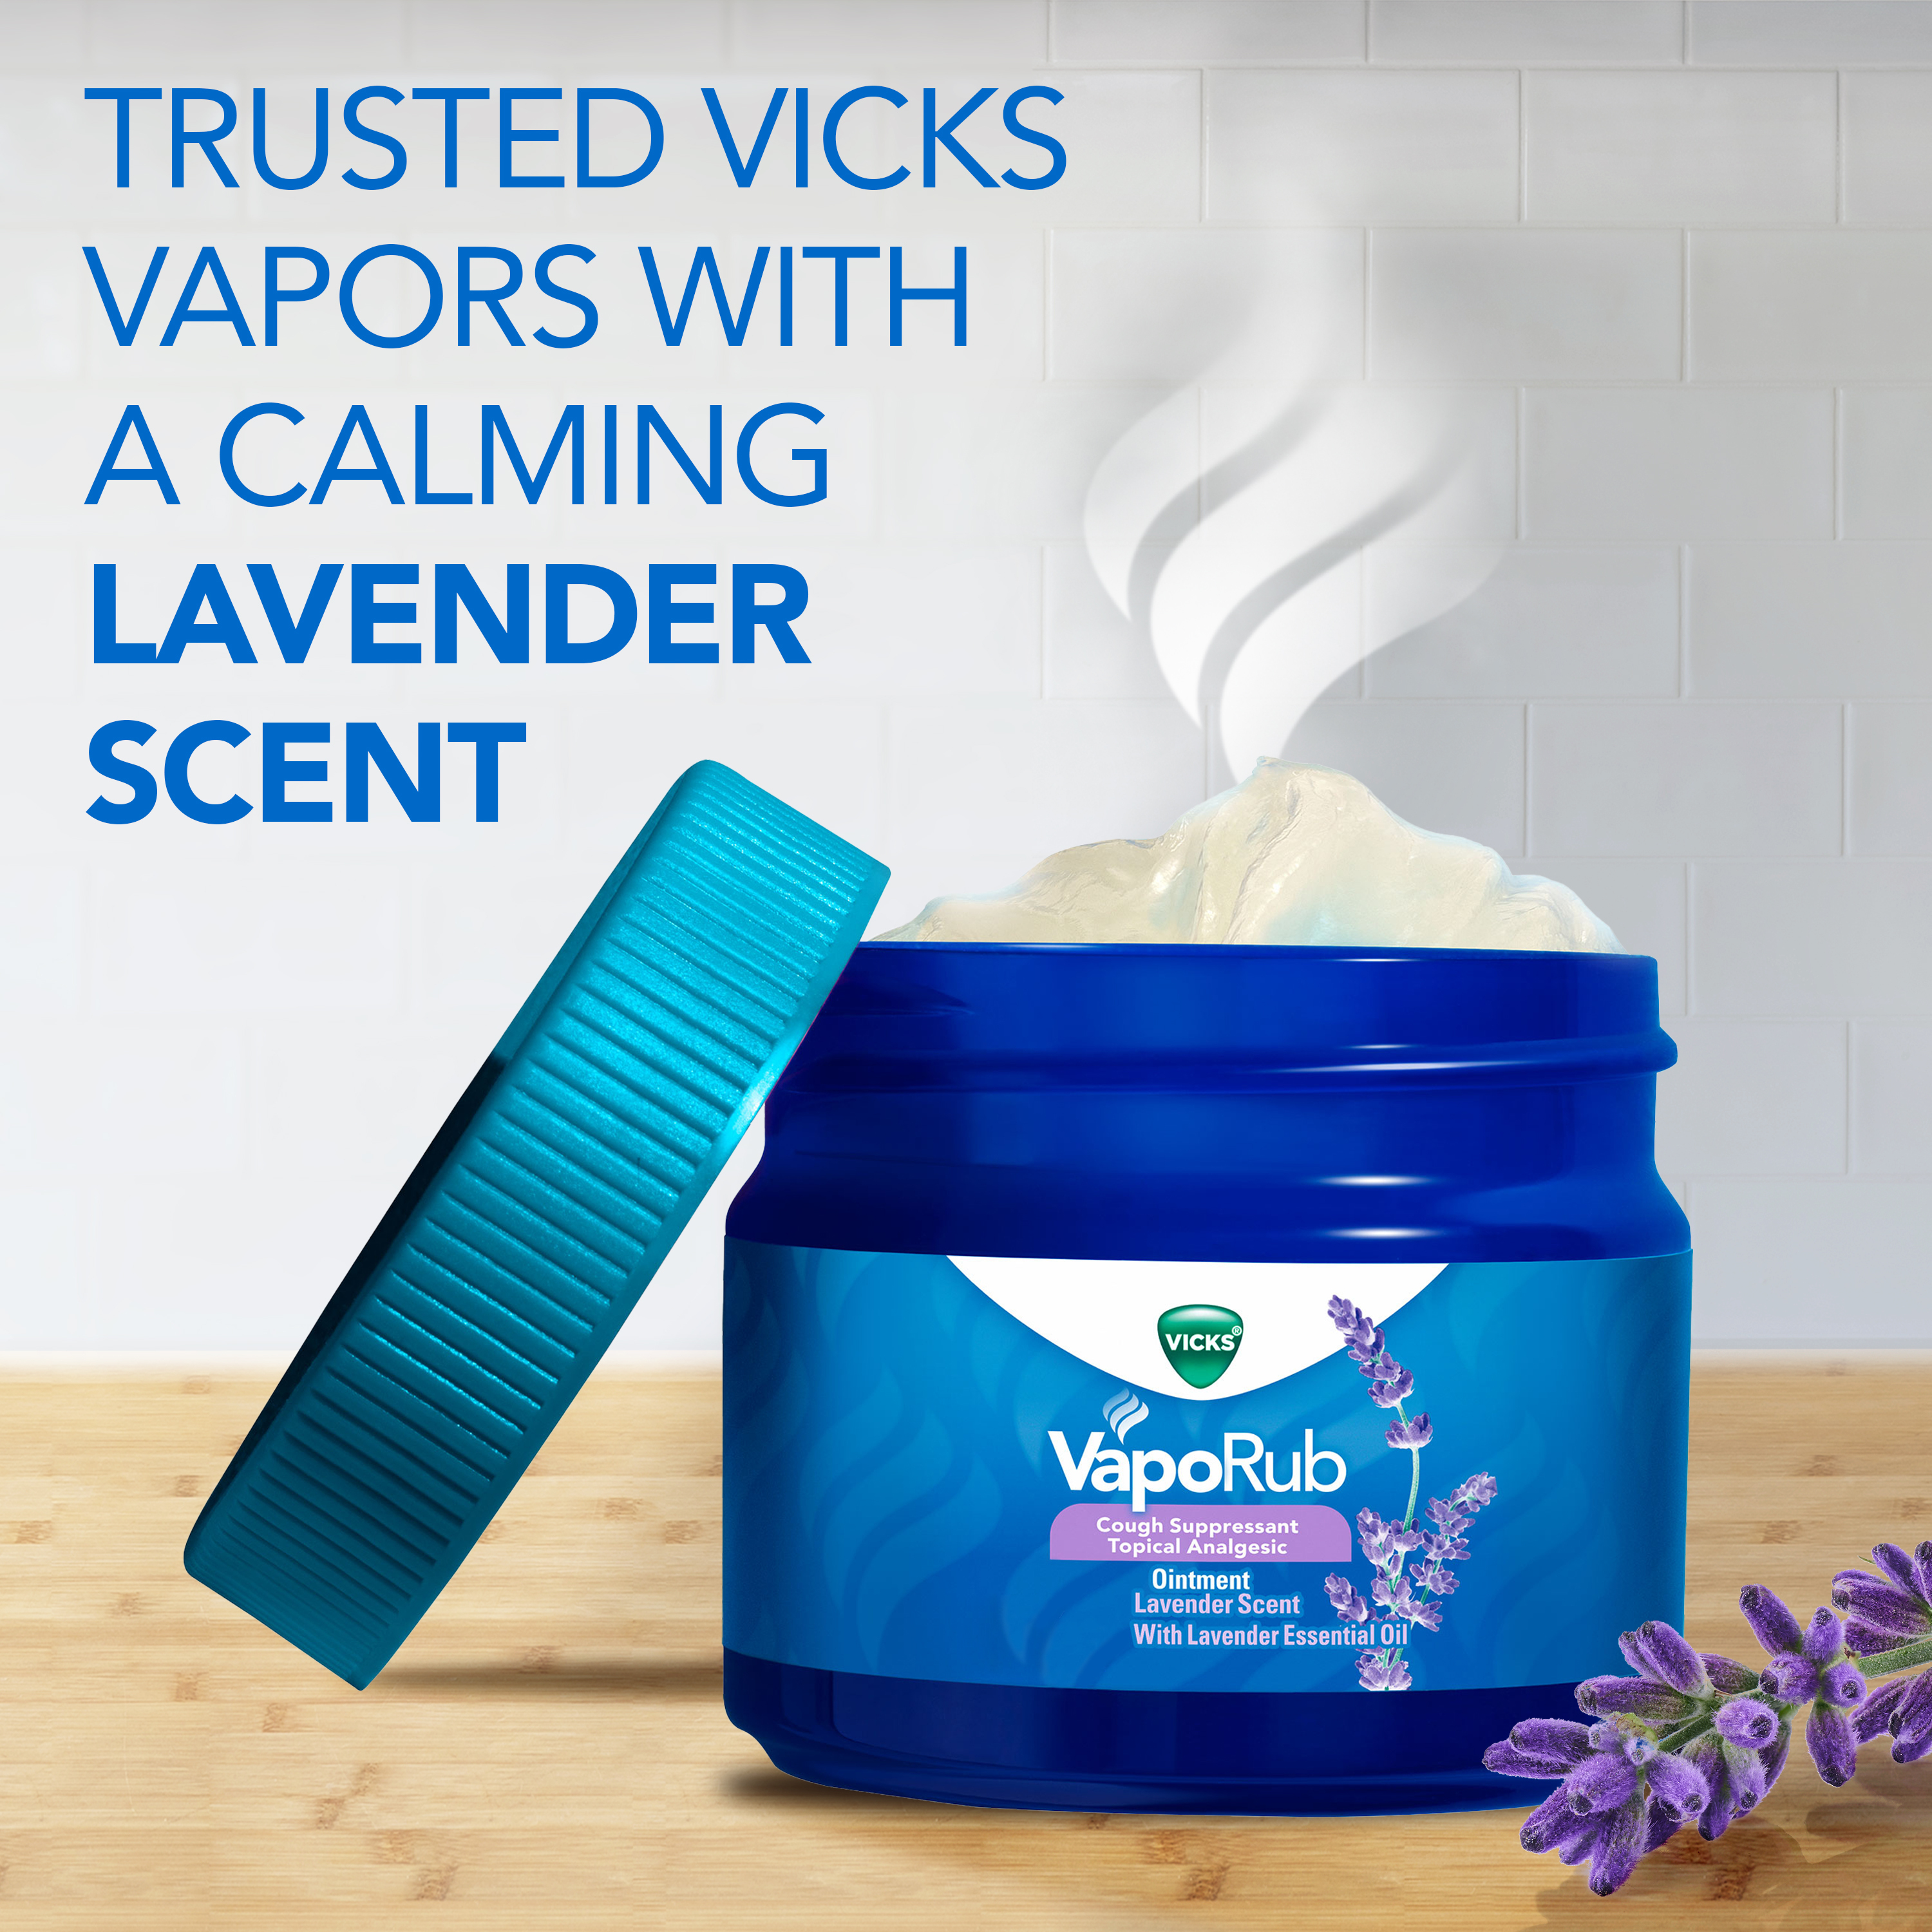 Vicks VapoRub, Lavender Scent, Cough Suppressant, Topical Chest Rub & Analgesic Ointment, Medicated Vicks Vapors, 1.76 oz - image 2 of 11